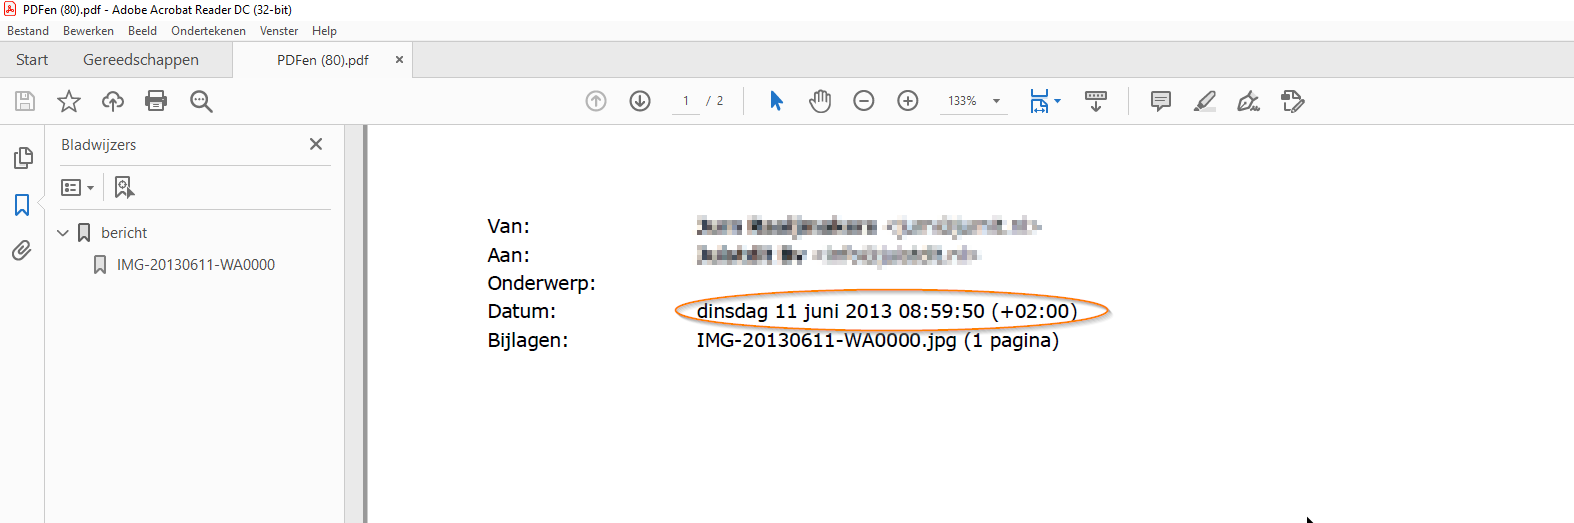 Datumformaat in PDF na eml of msg (e-mail) conversie